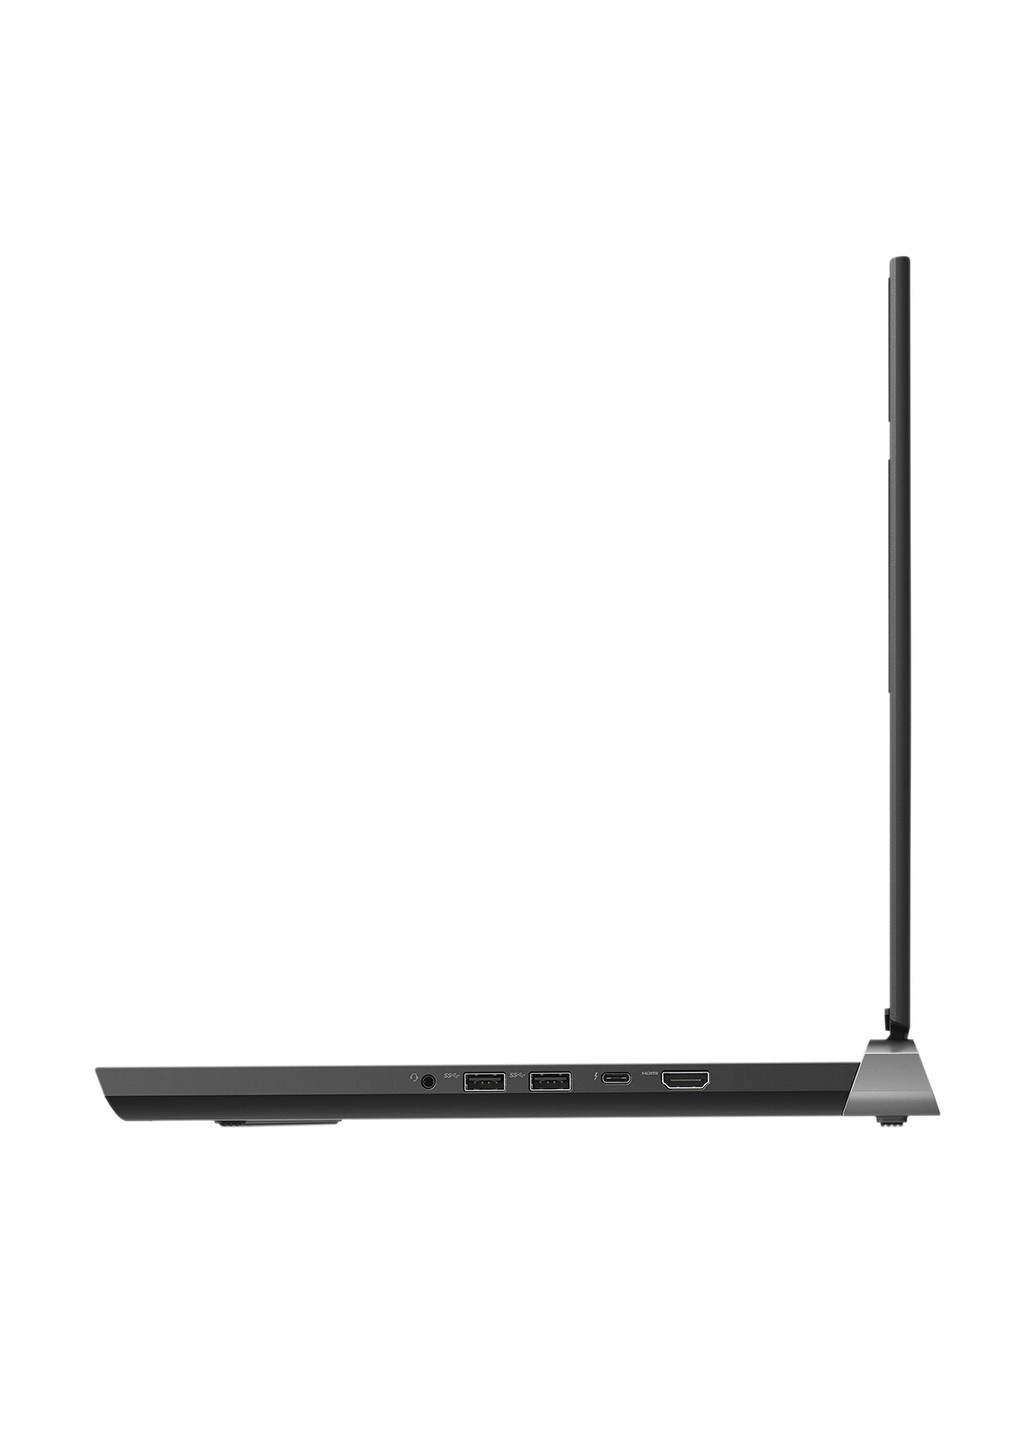 Ноутбук Dell inspiron g5 15 5587 (55g5i916s2h1g16-wbk) black (137041922)